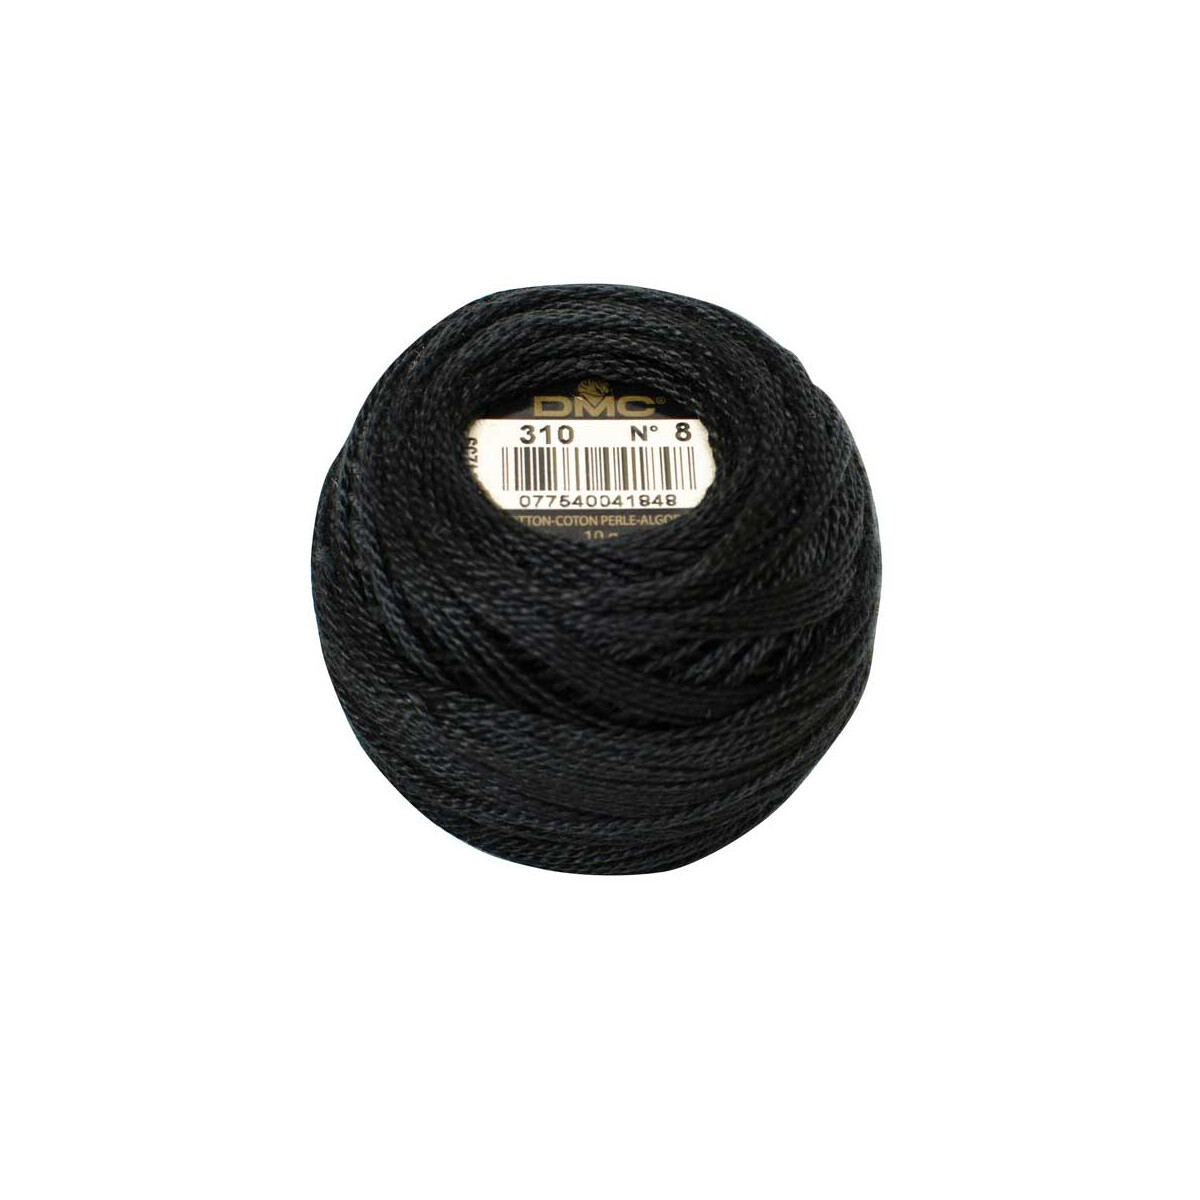 DMC Pearl Cotton on a ball Size 8, 10g, 116A/8-310